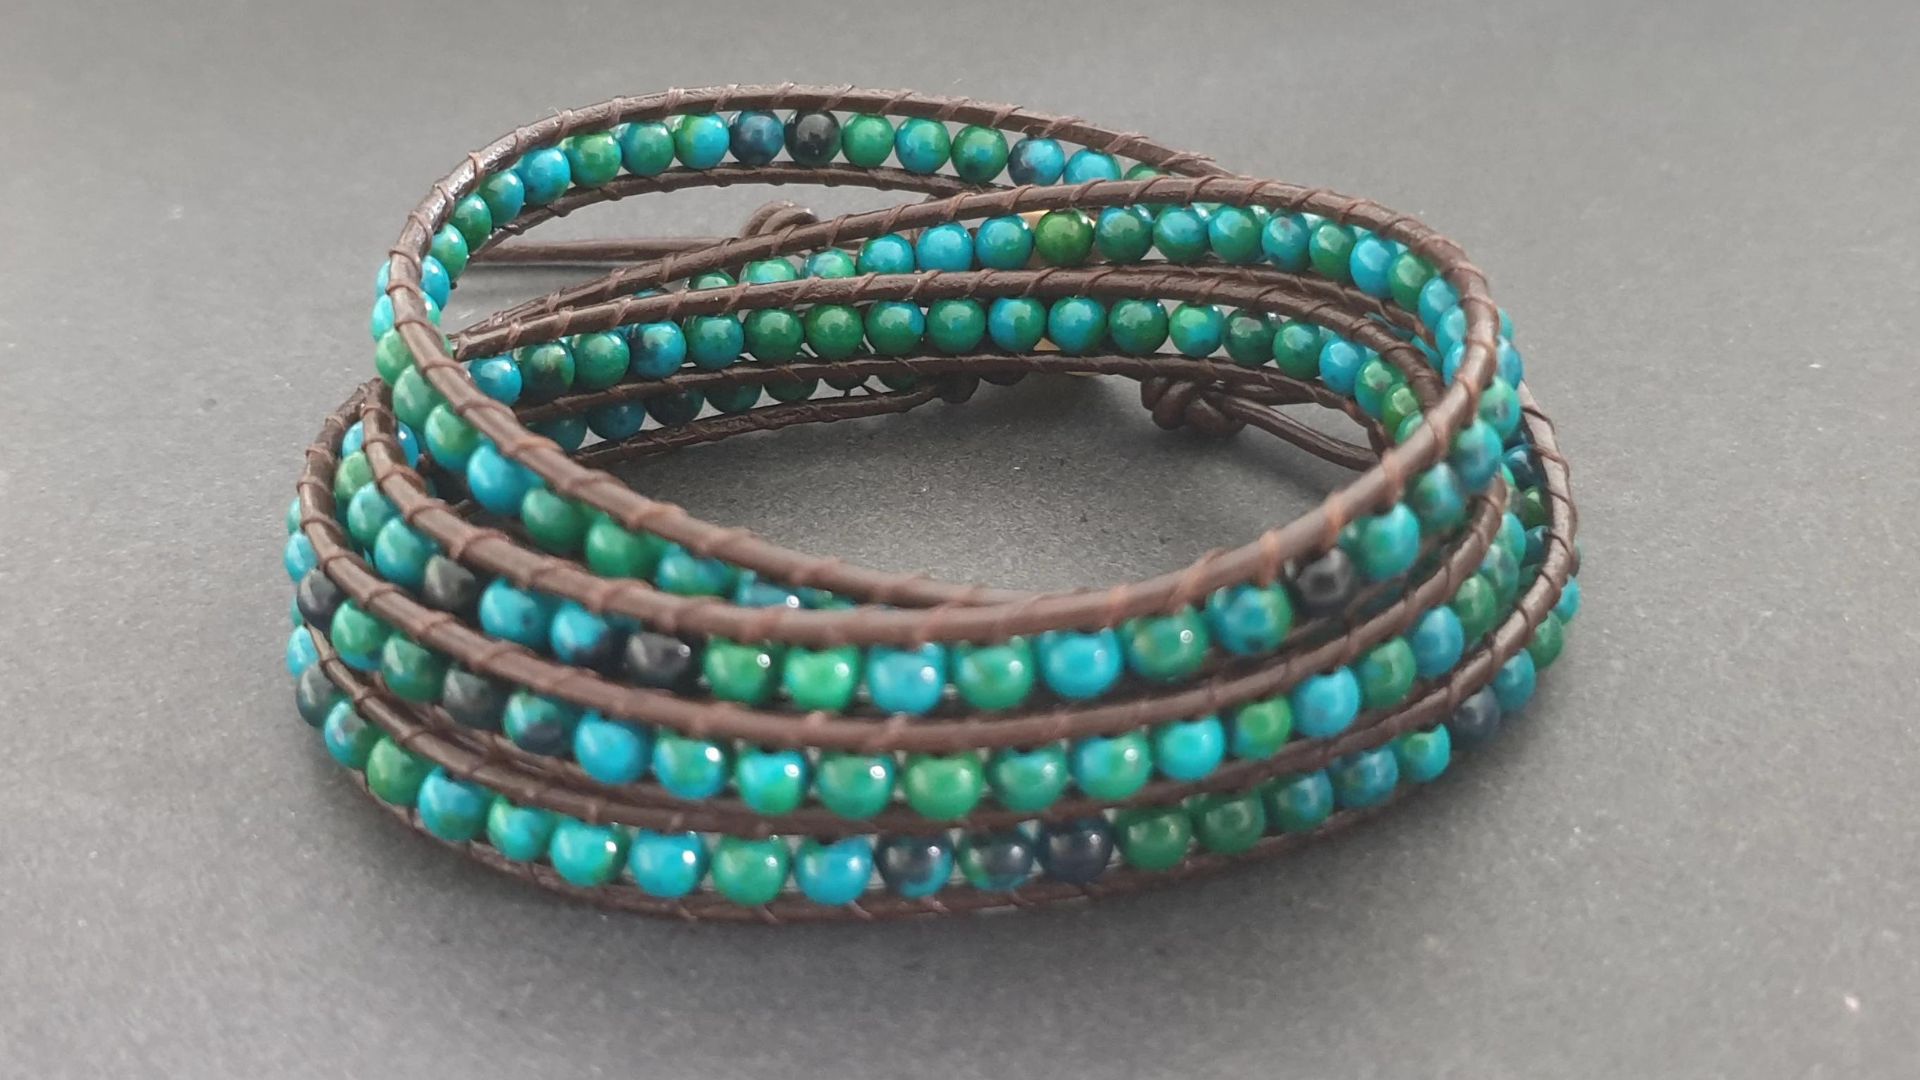 Green Color Beads Embedded In Bracelet